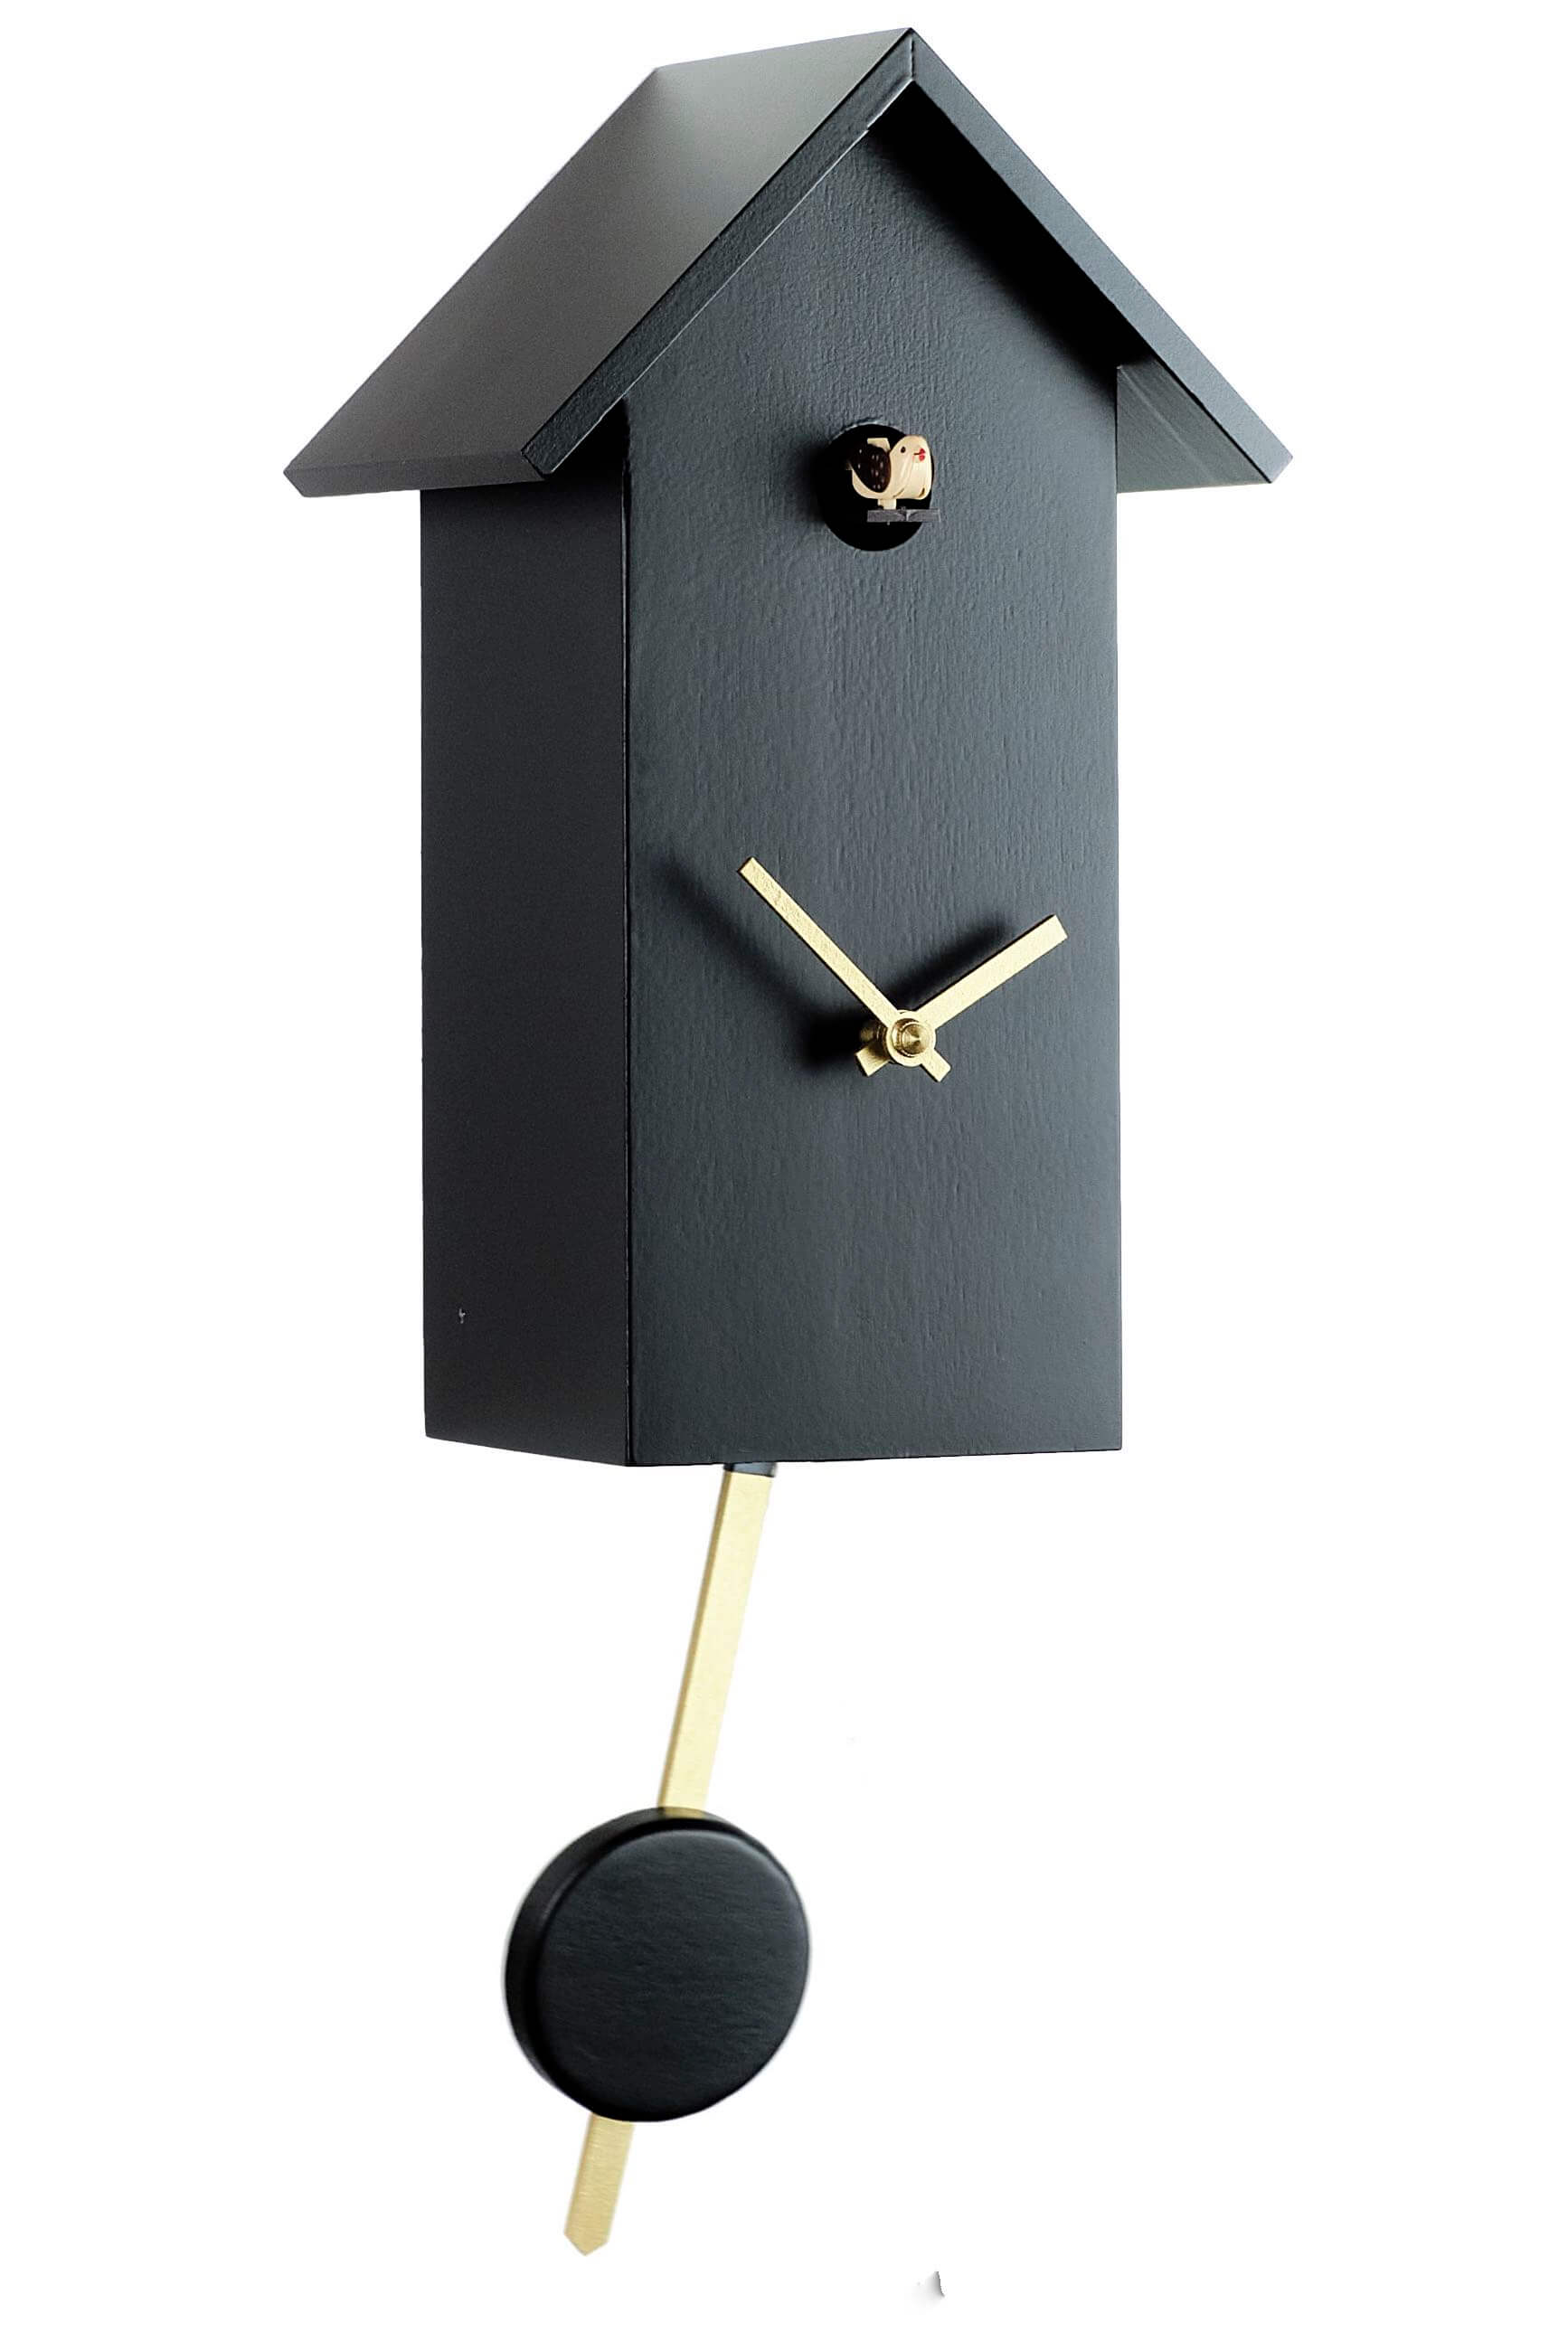 Engstler -Kuckucksuhr modern schwarz Echtholz Quarz Uhrwerk 29cm- 360/13 Q